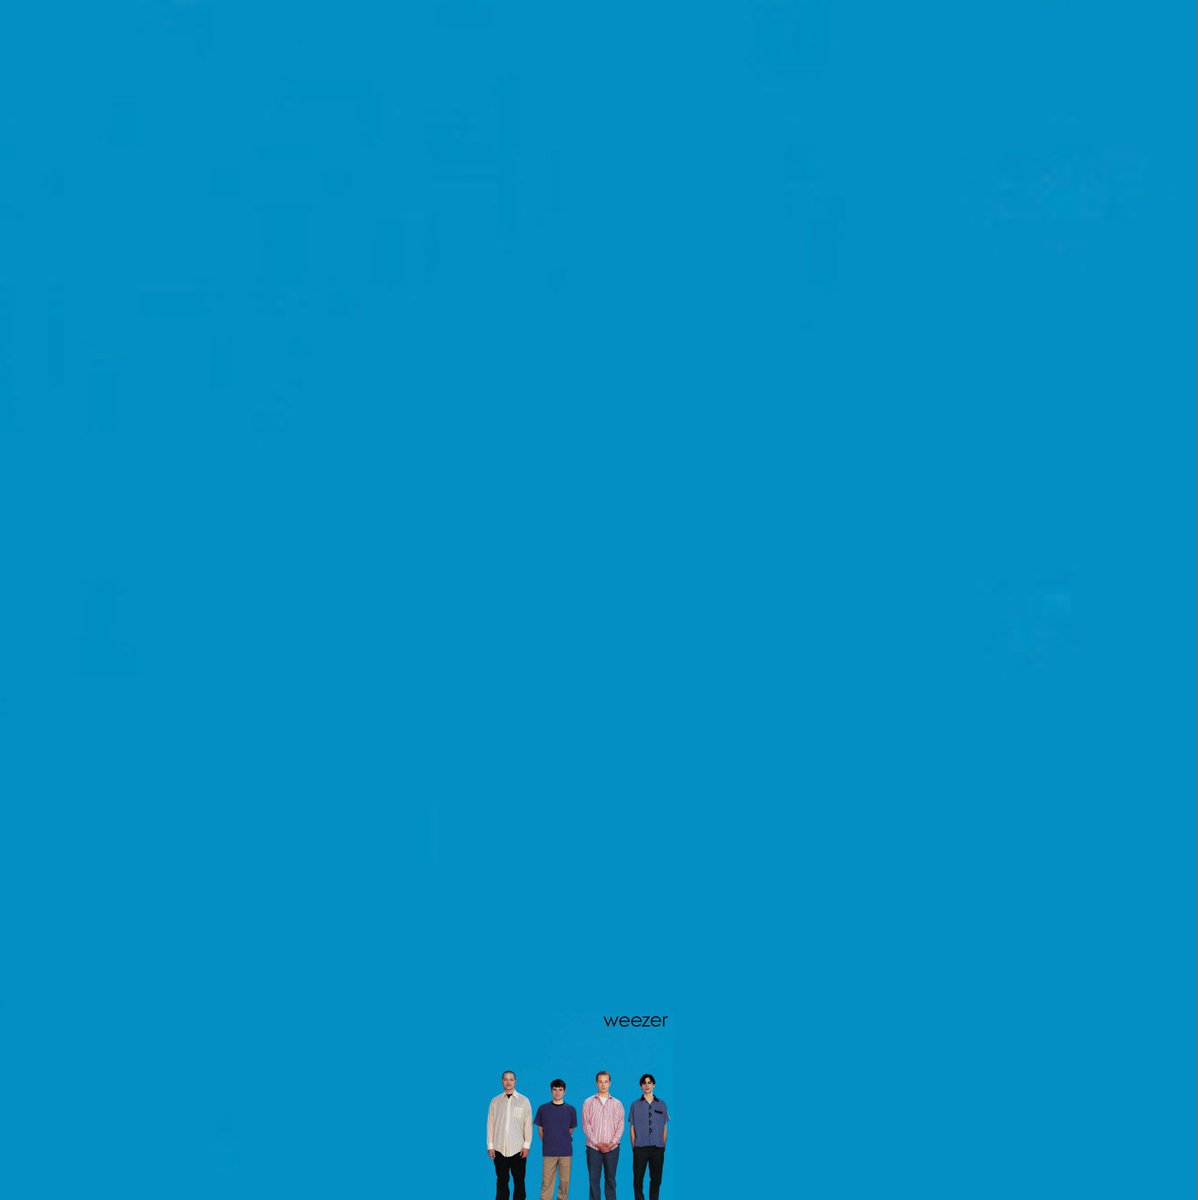 Expanding famous album covers using AI🪄😮

1. Weezer - Weezer (Blue Album)